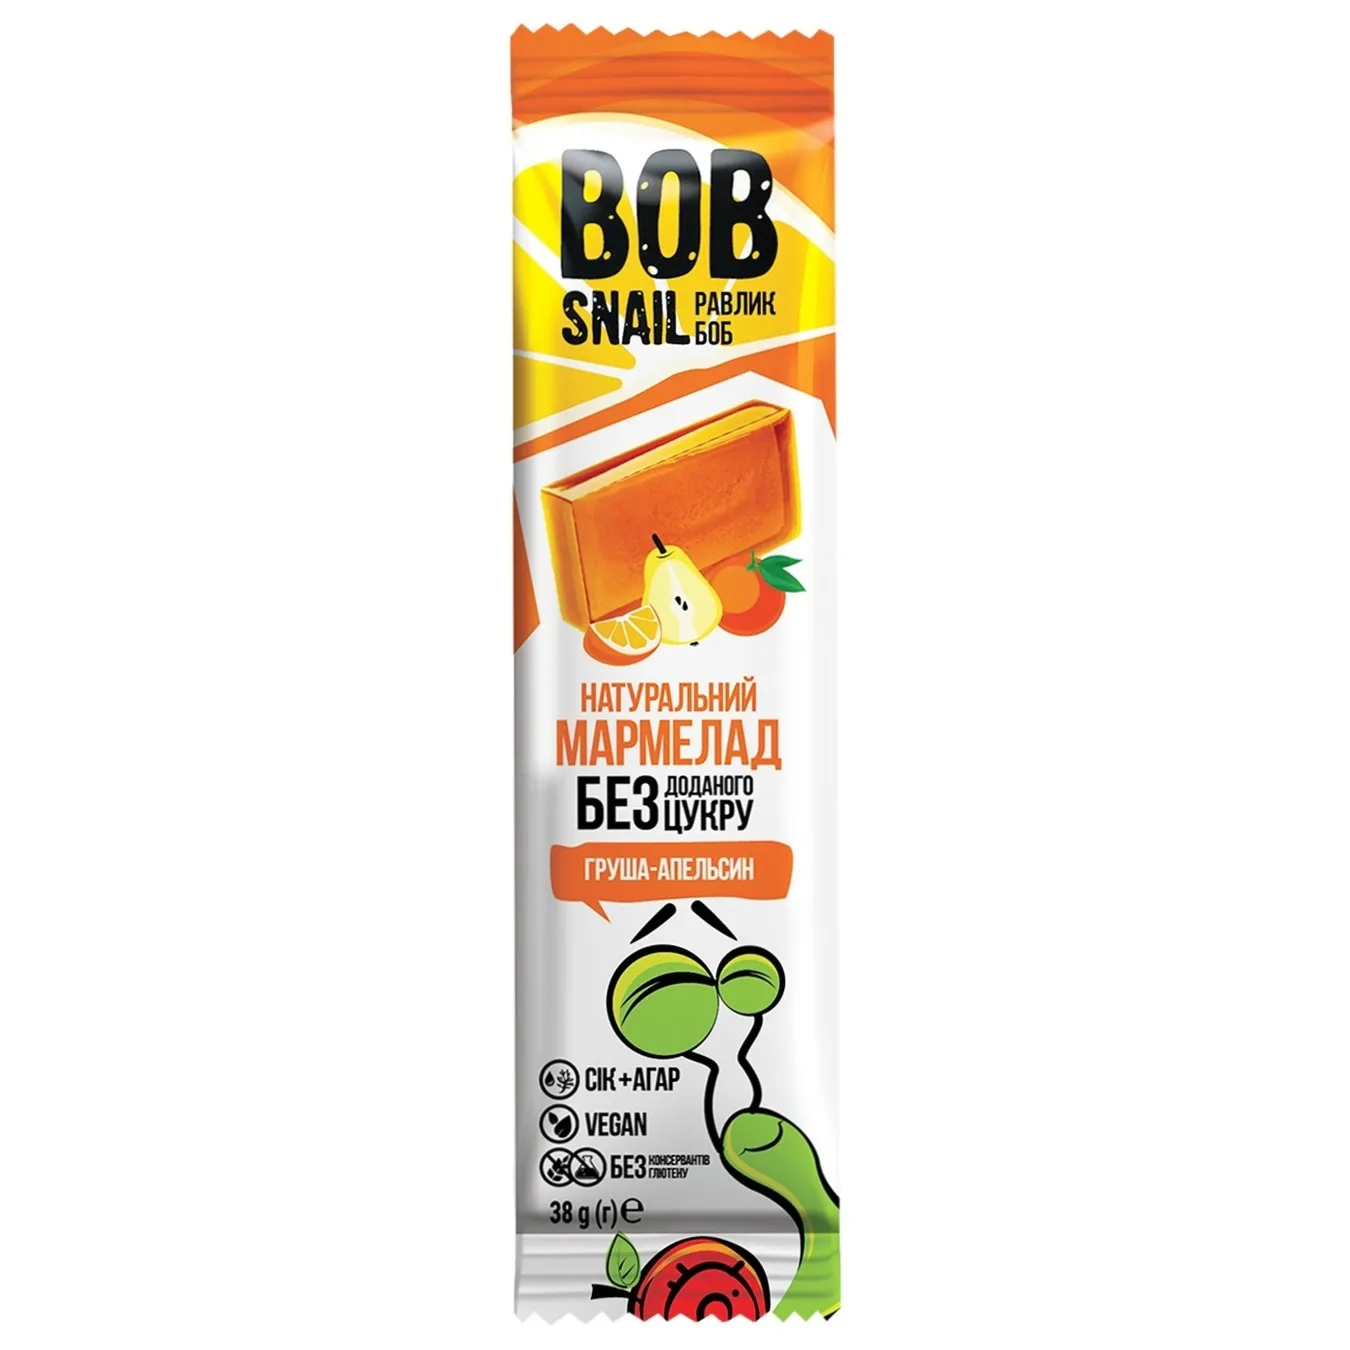 Marmalade Bob Snail pear-orange without sugar 38g